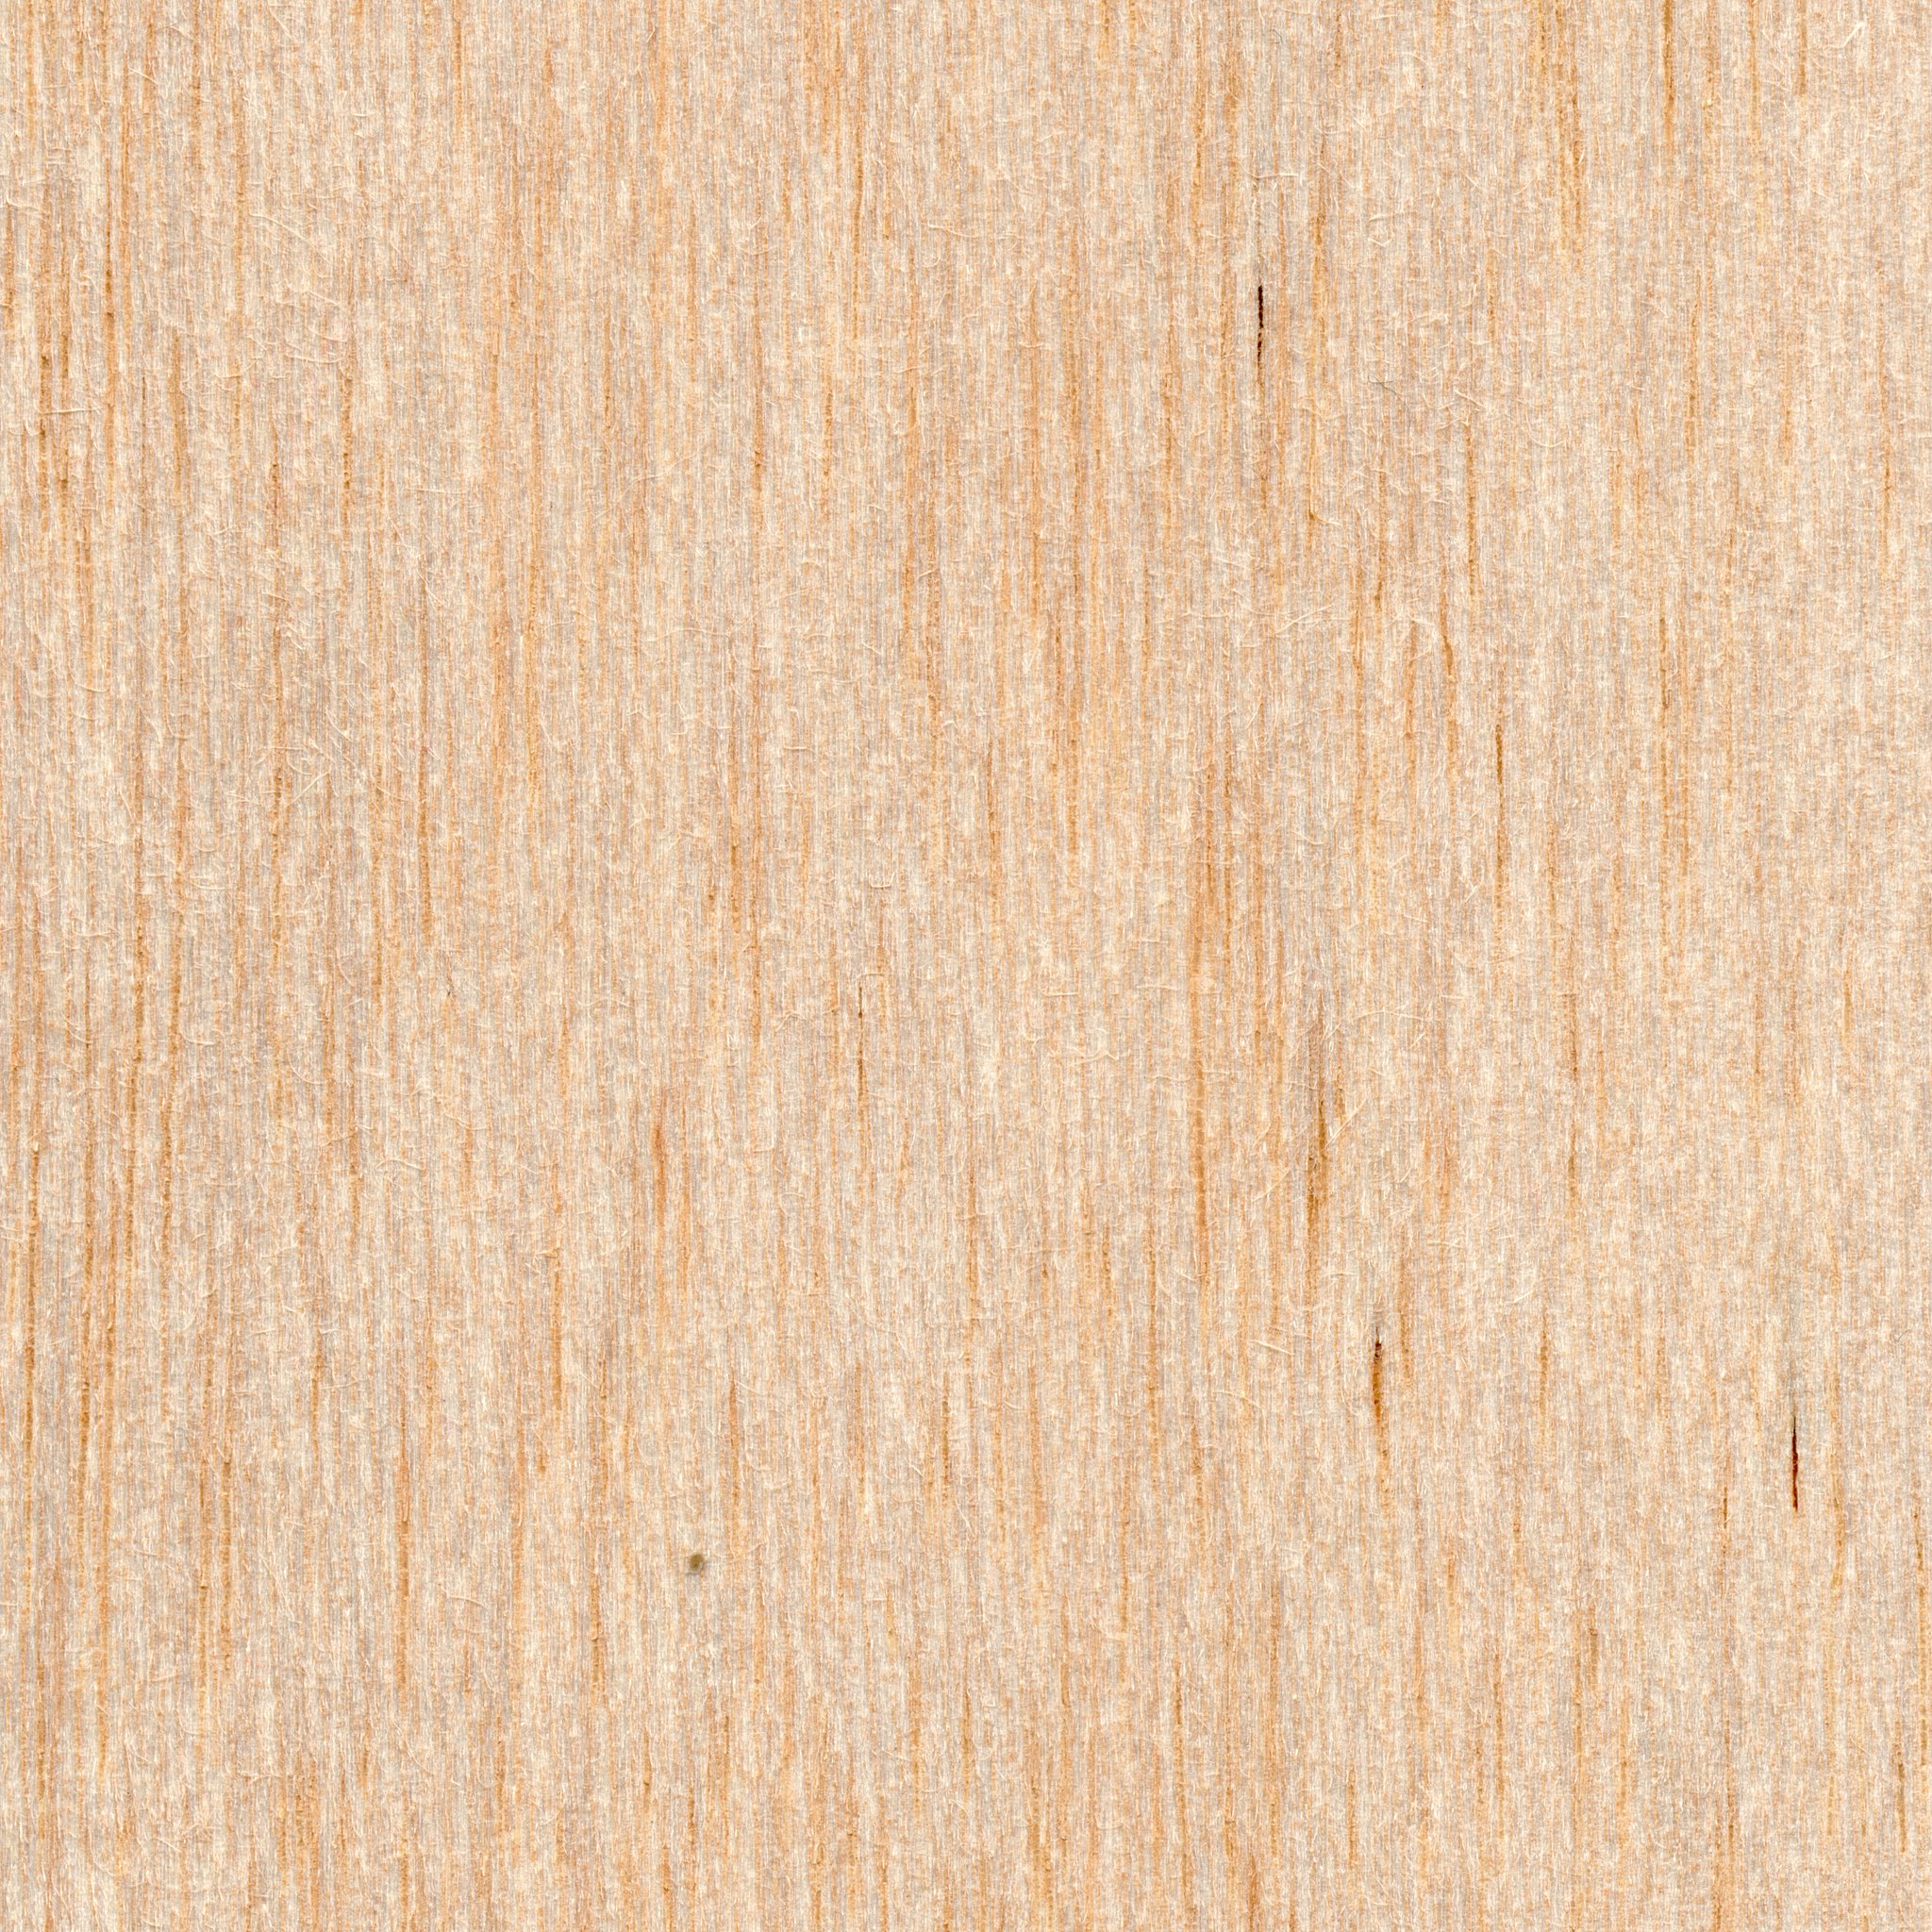 https://upload.wikimedia.org/wikipedia/commons/thumb/c/cb/Balsa_Wood_Texture.jpg/2048px-Balsa_Wood_Texture.jpg